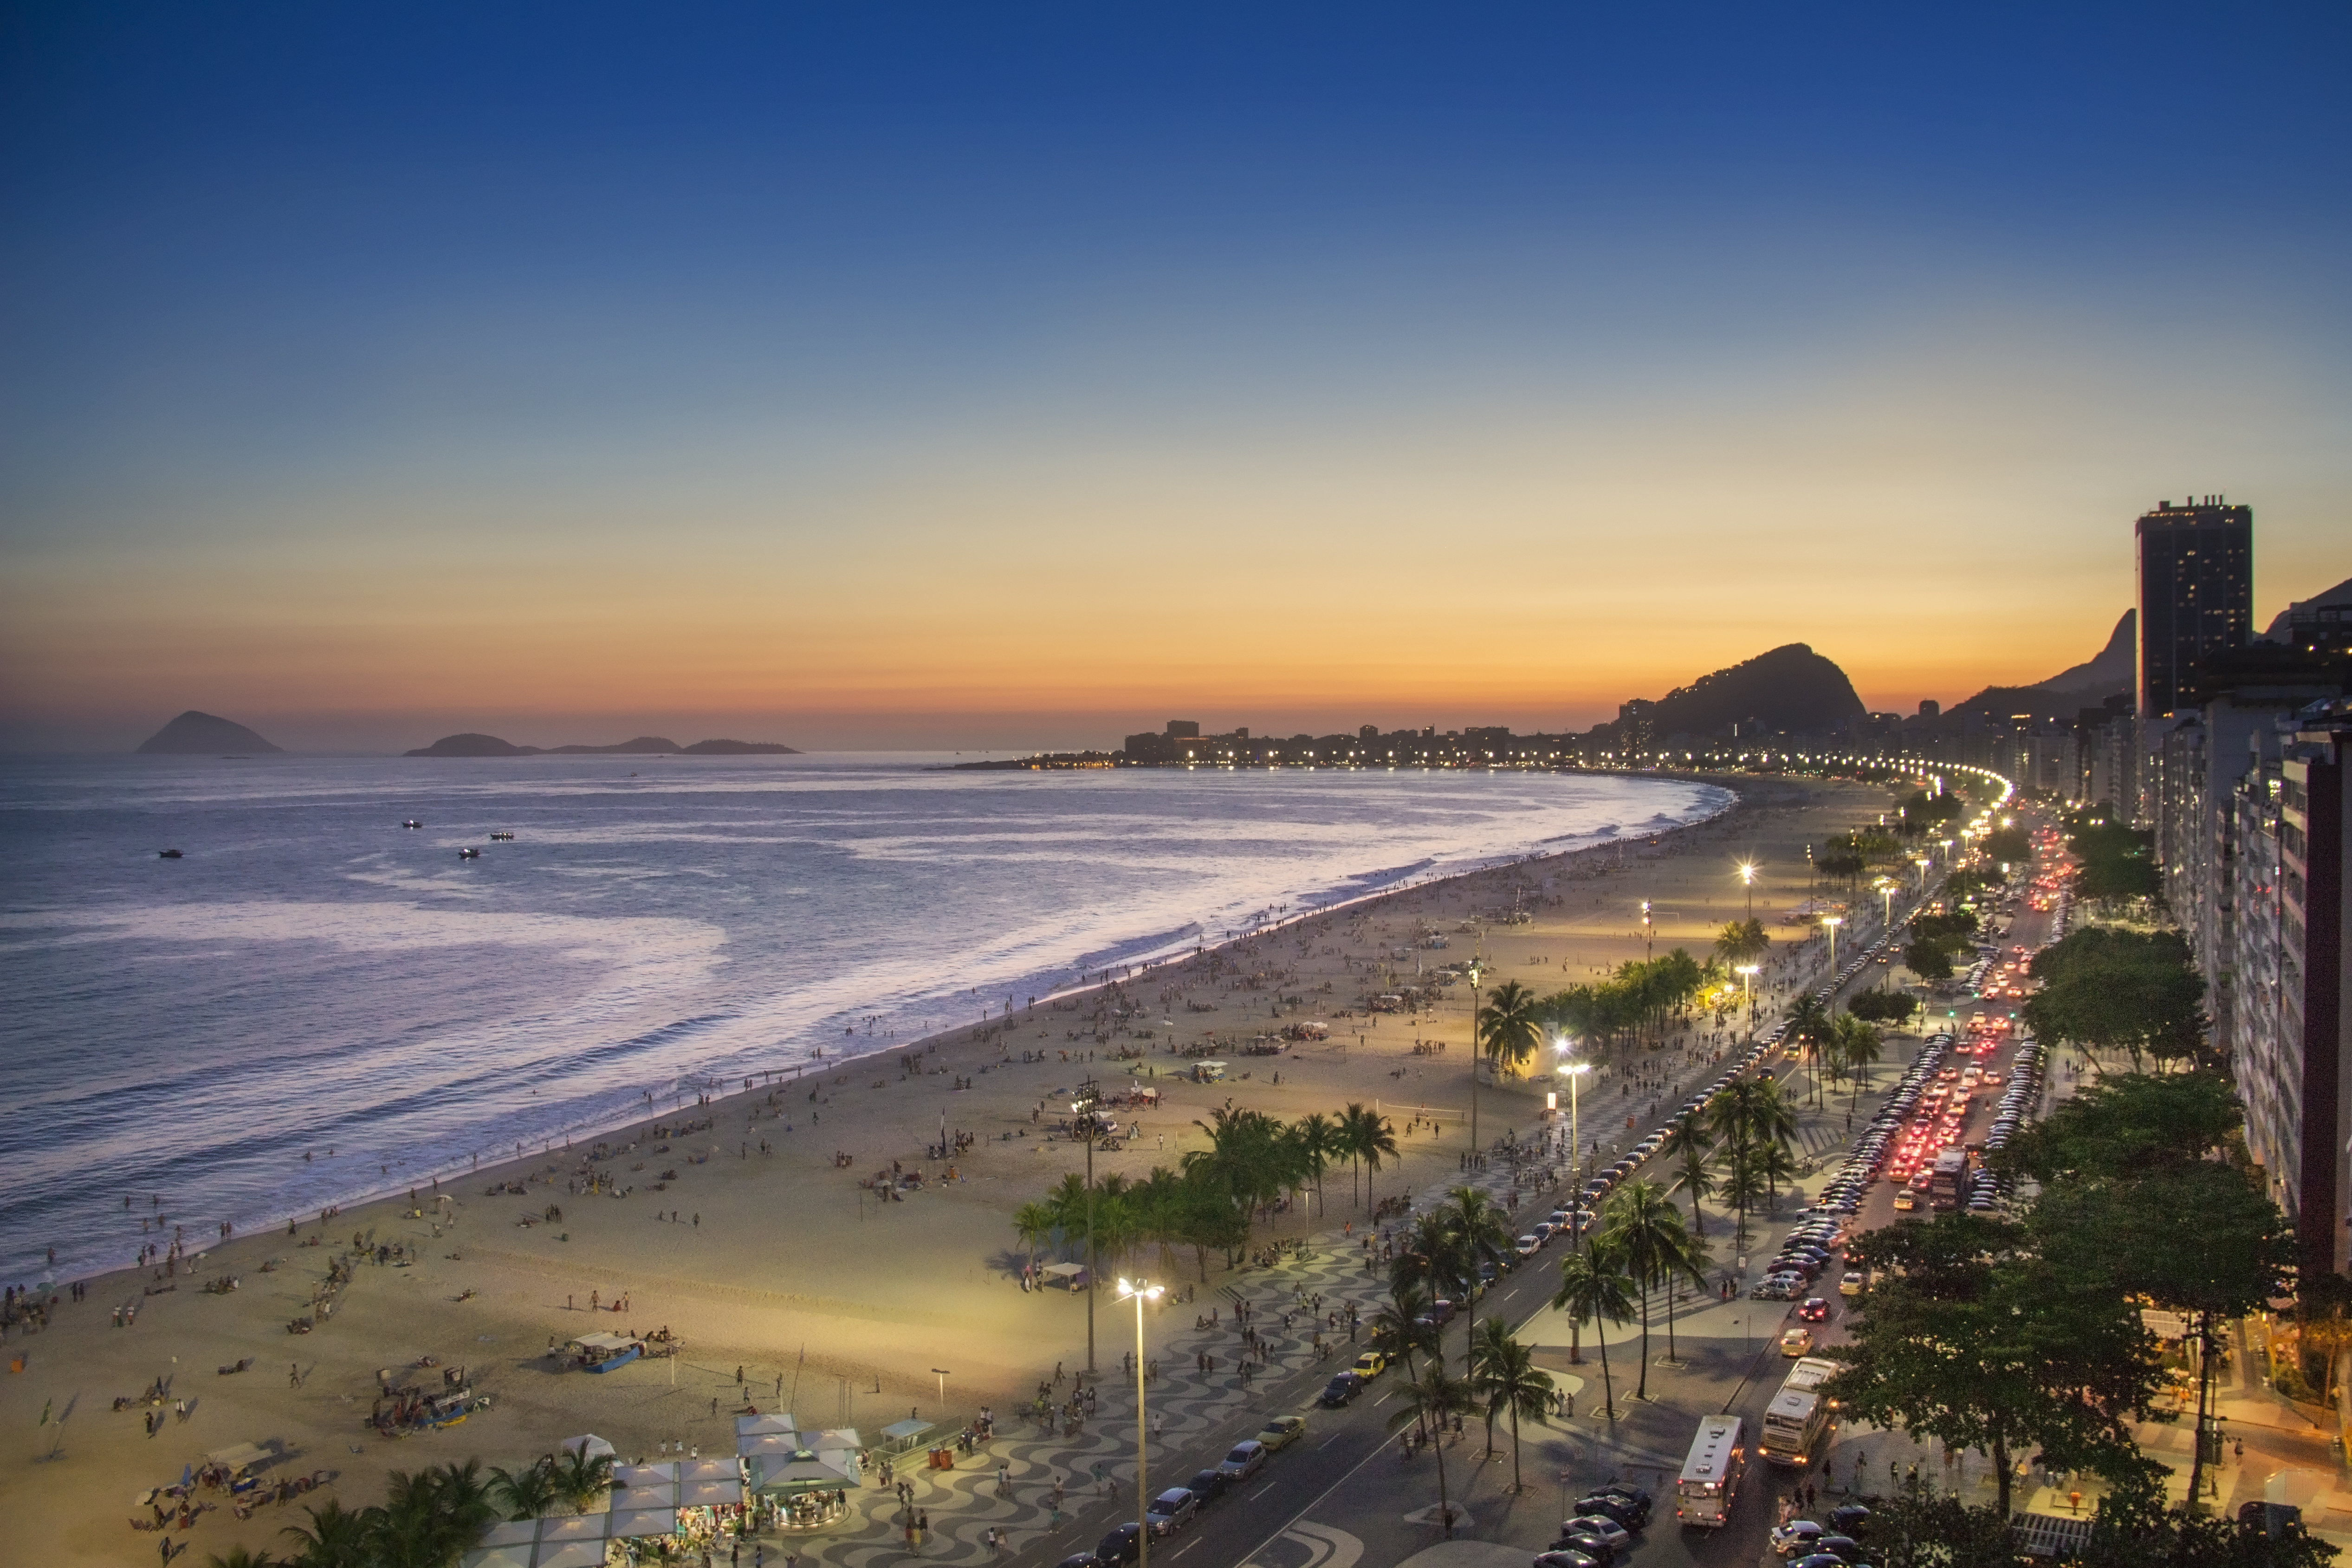 Copacabana Beach | Rio de Janeiro, Brazil Attractions - Lonely Planet